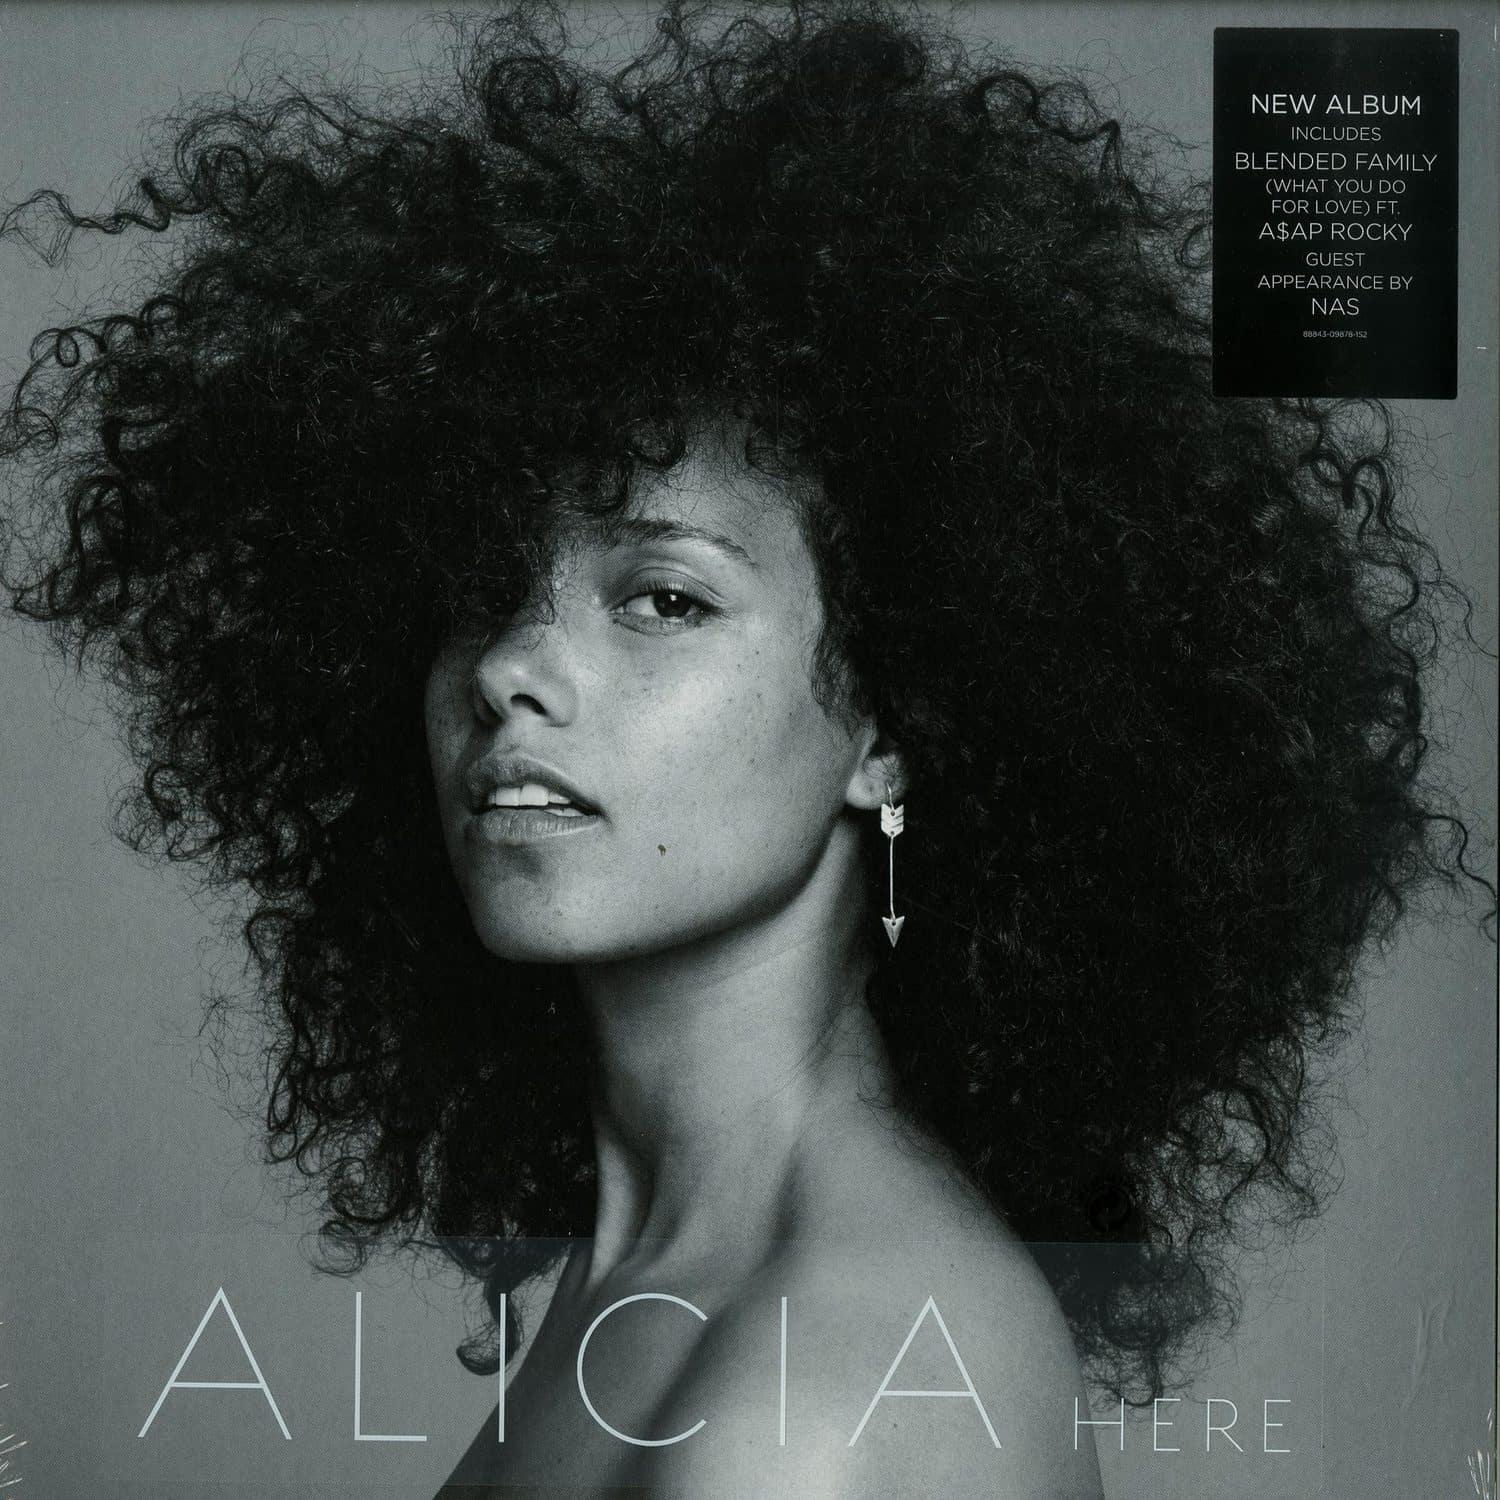 Alicia Keys - HERE 